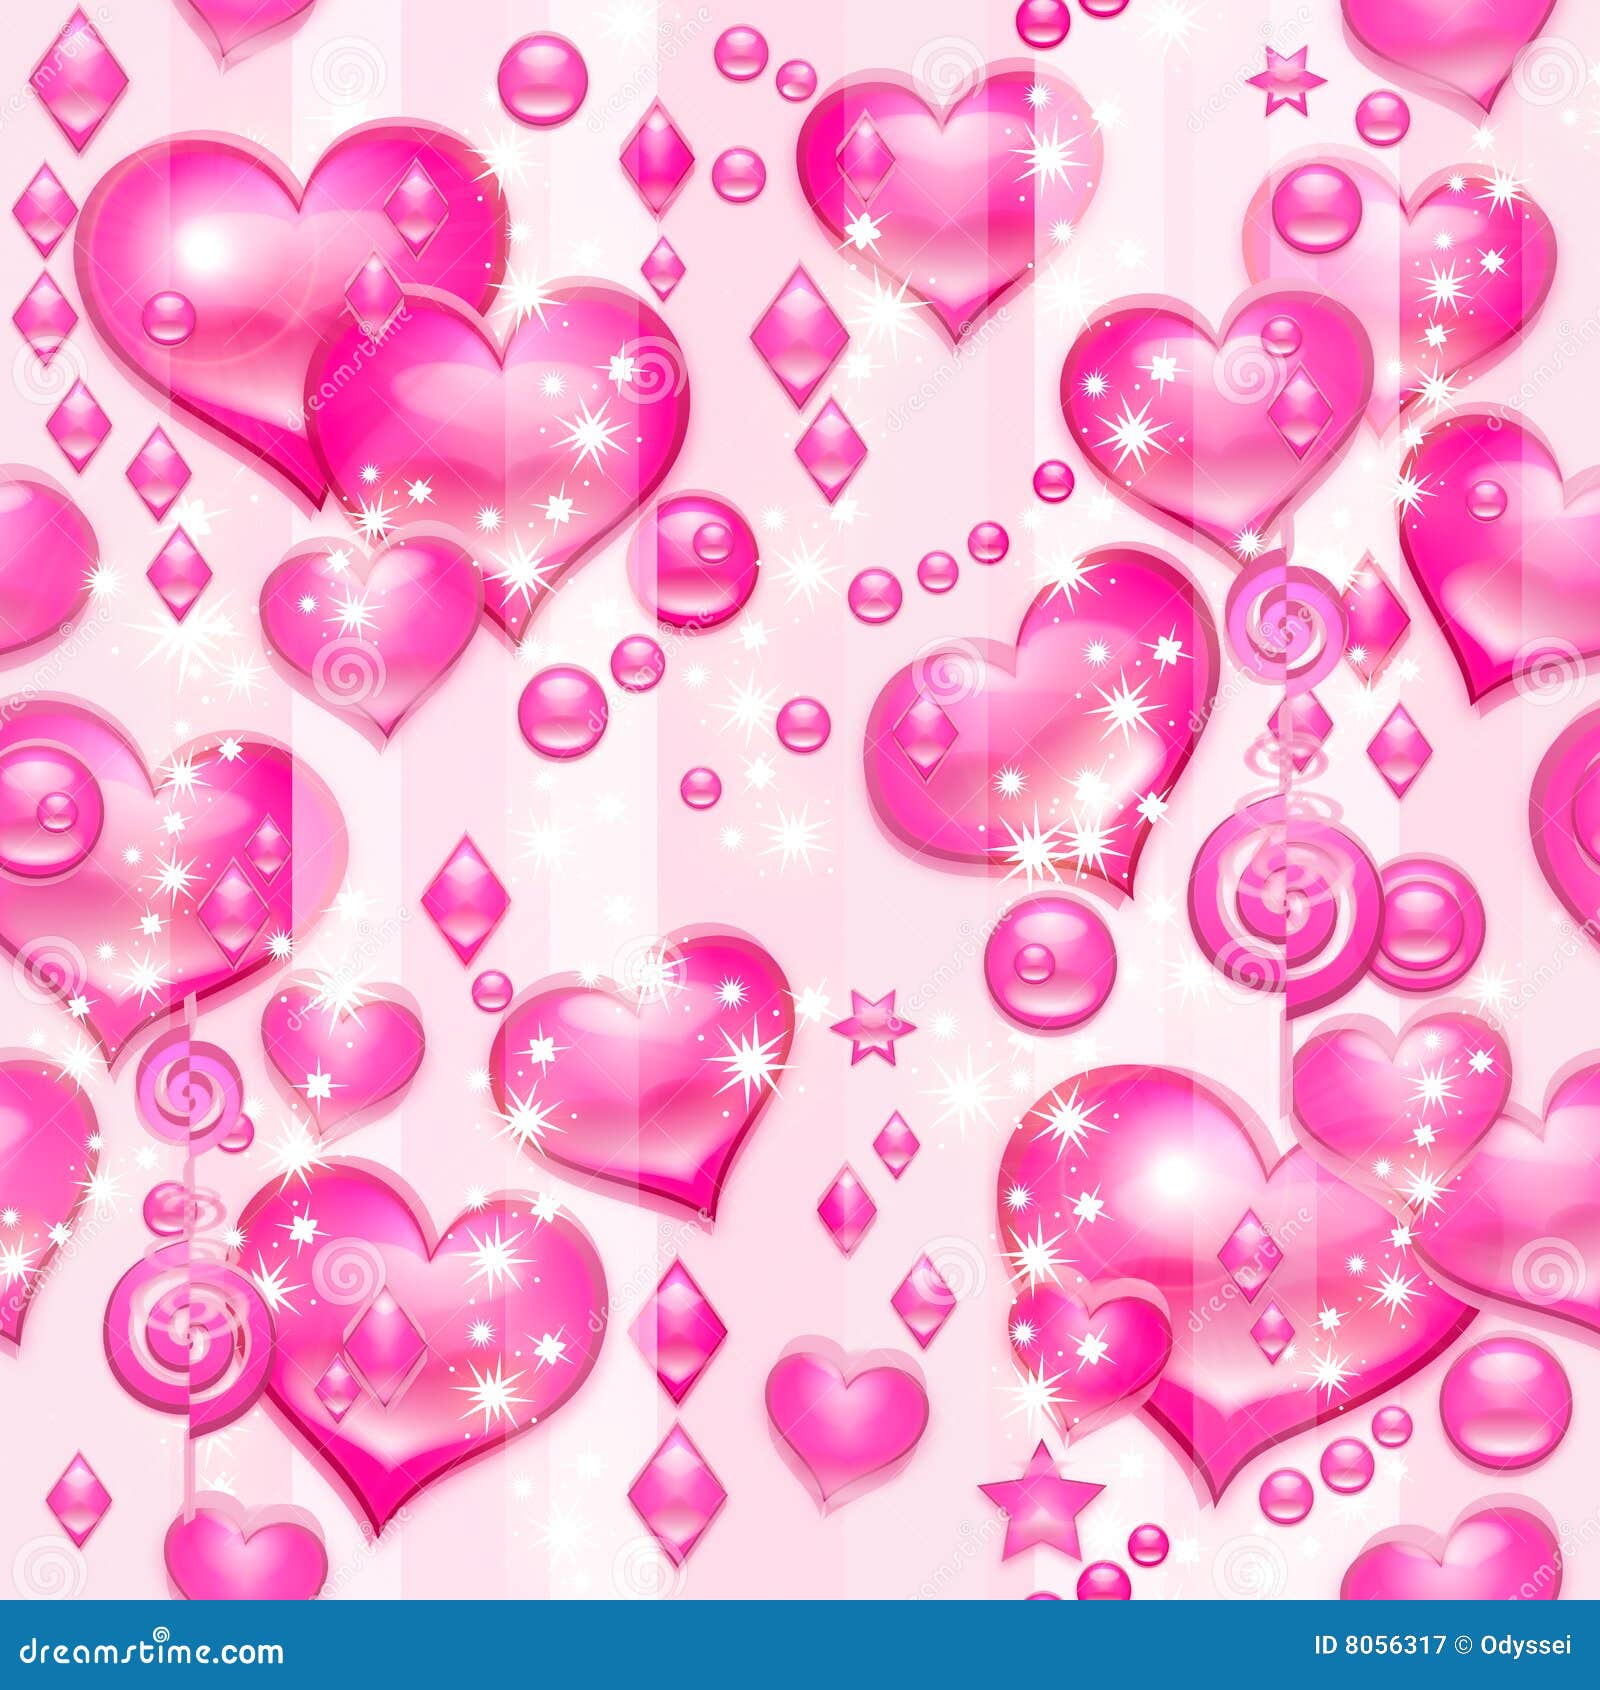 valentine's rosy hearts